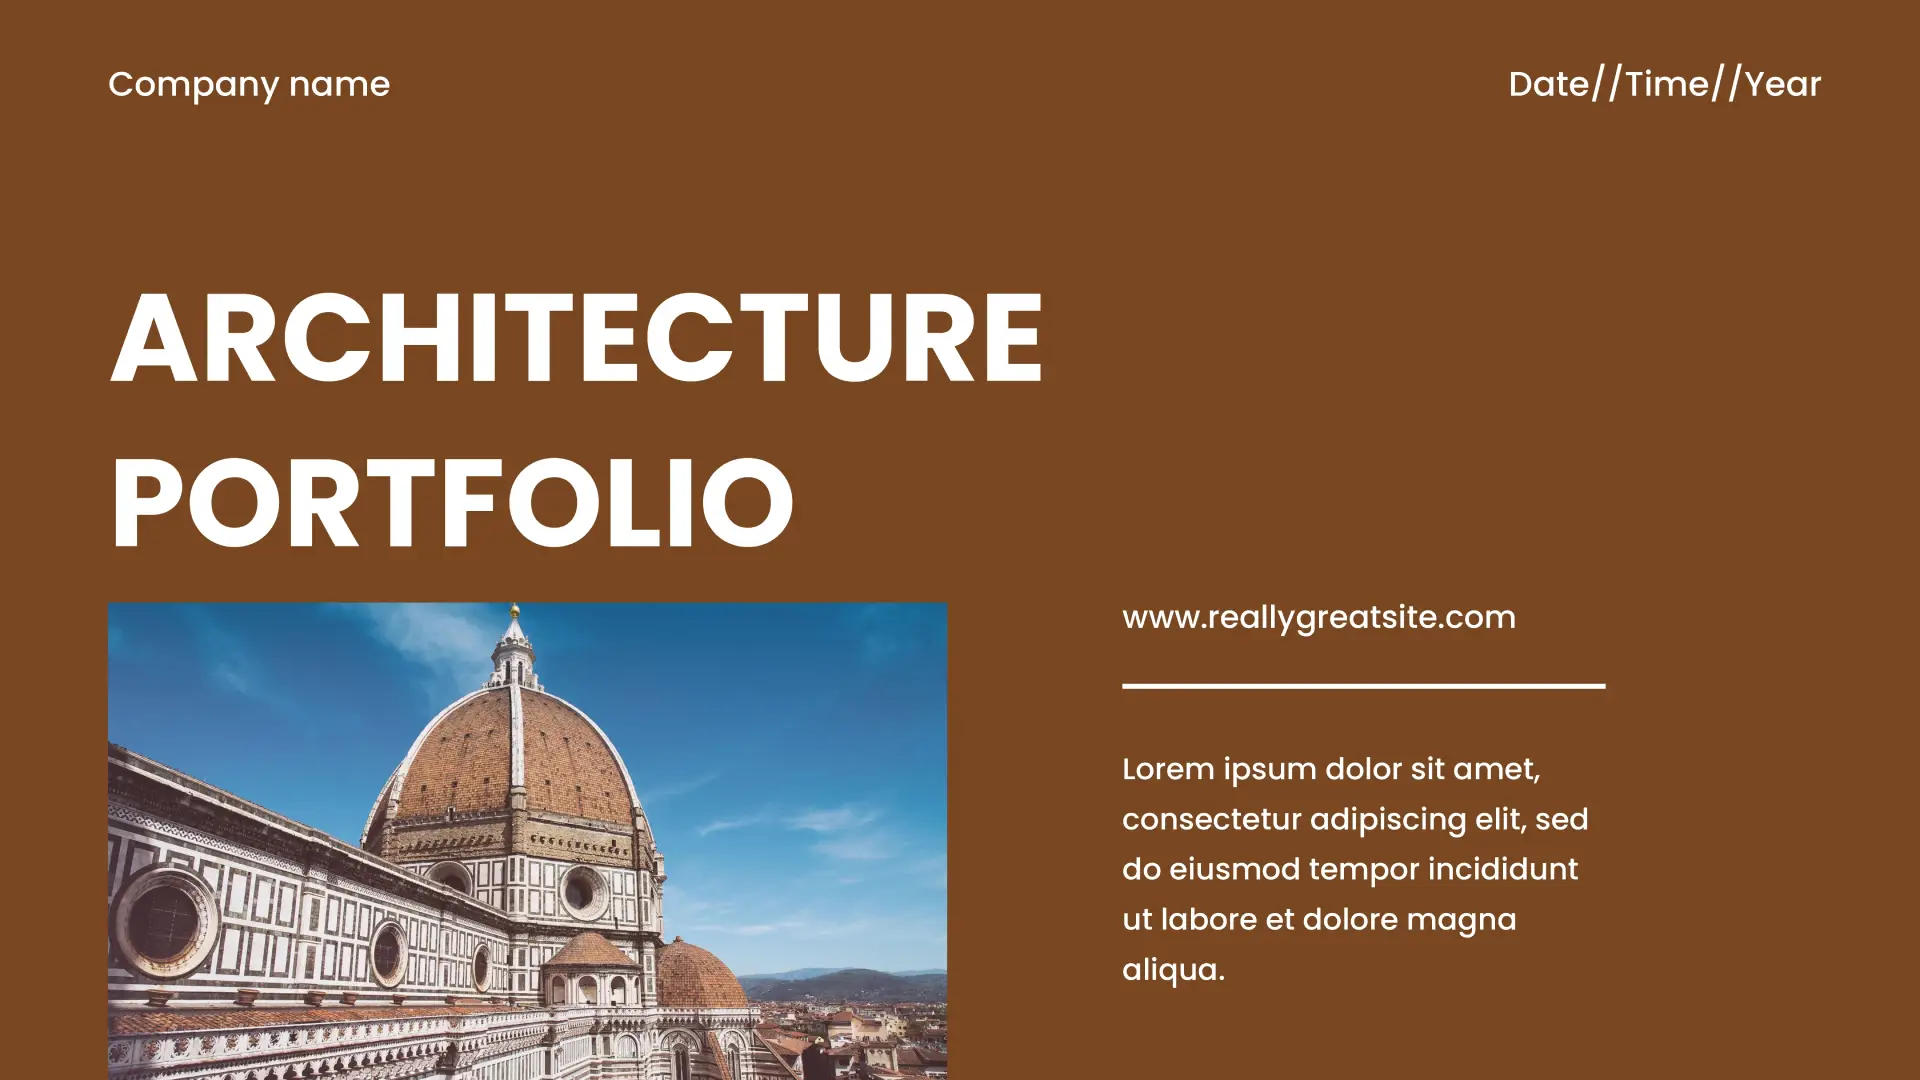 Architecture portfolio Template for Google Slides